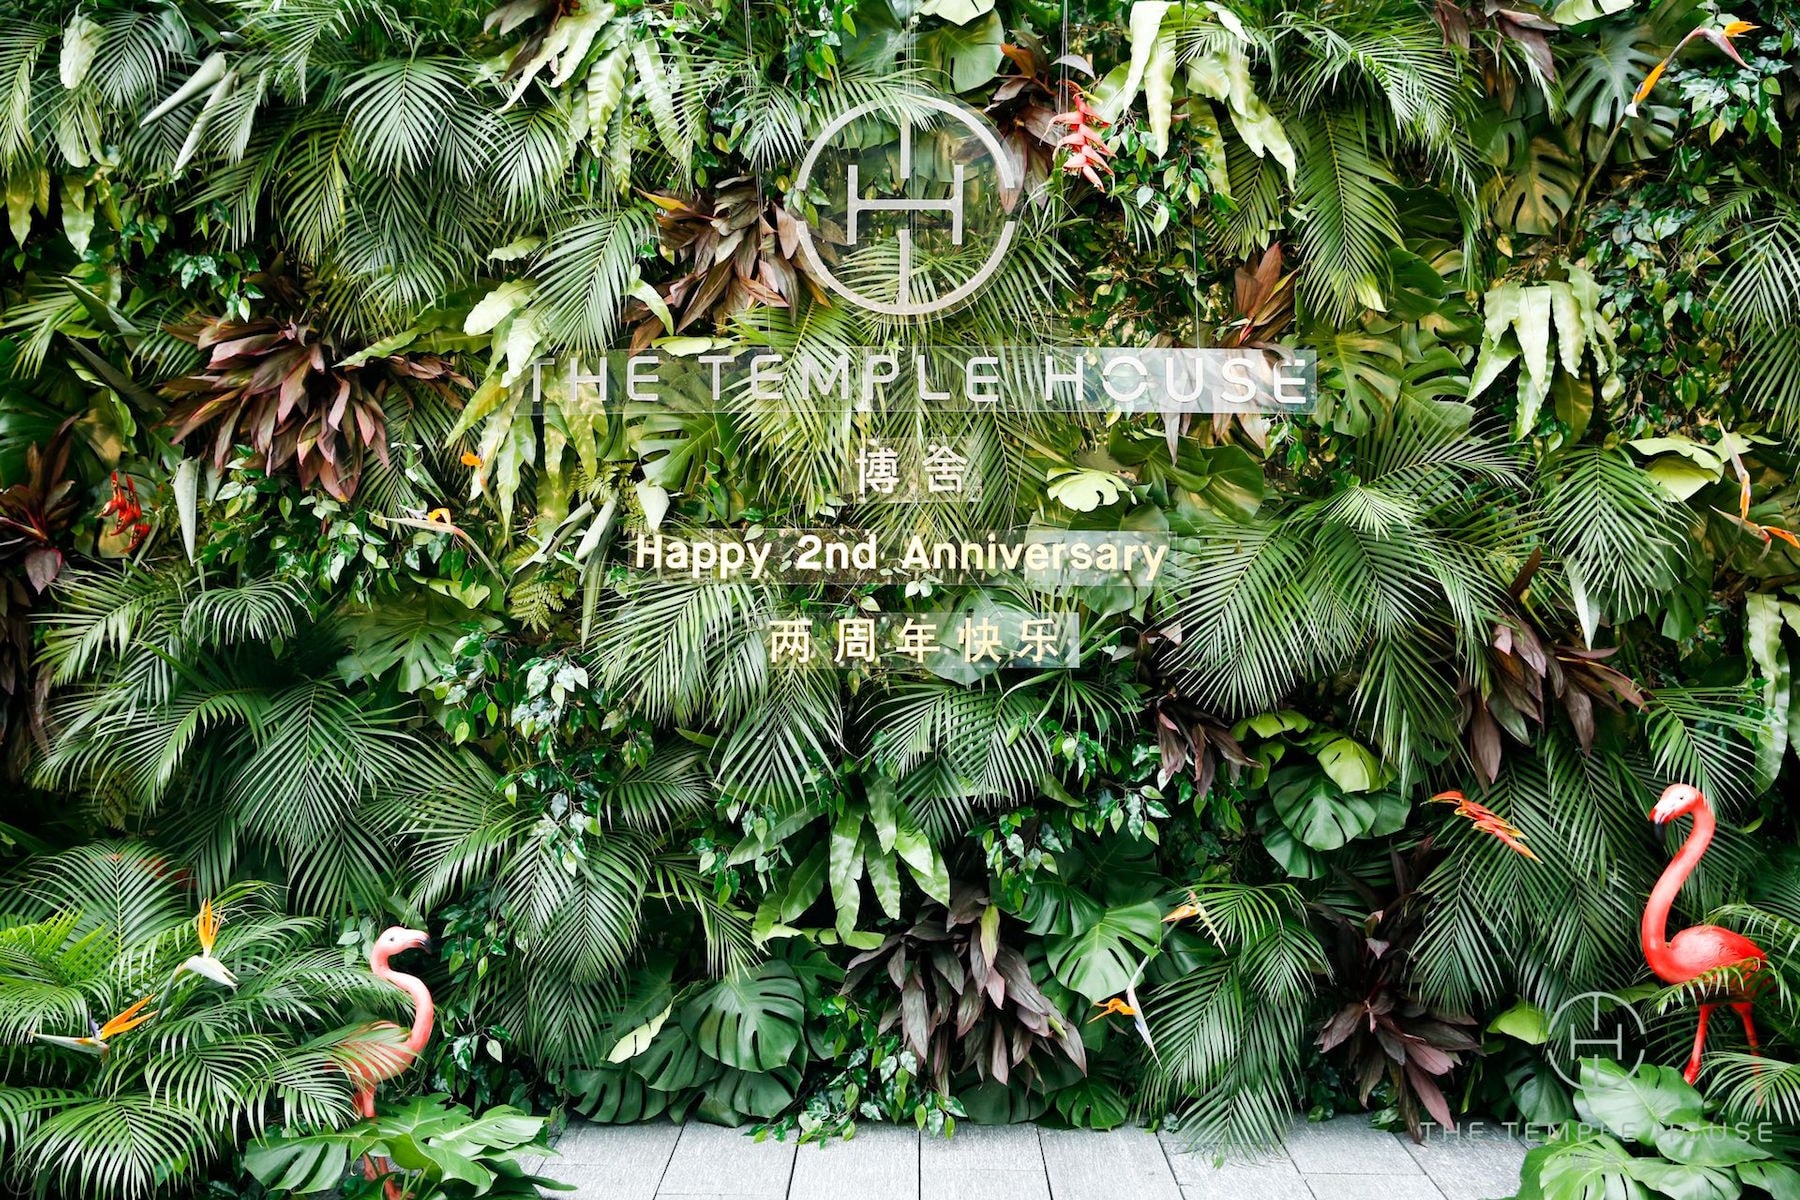 The Temple House Chengdu 2nd Anniversary Recap